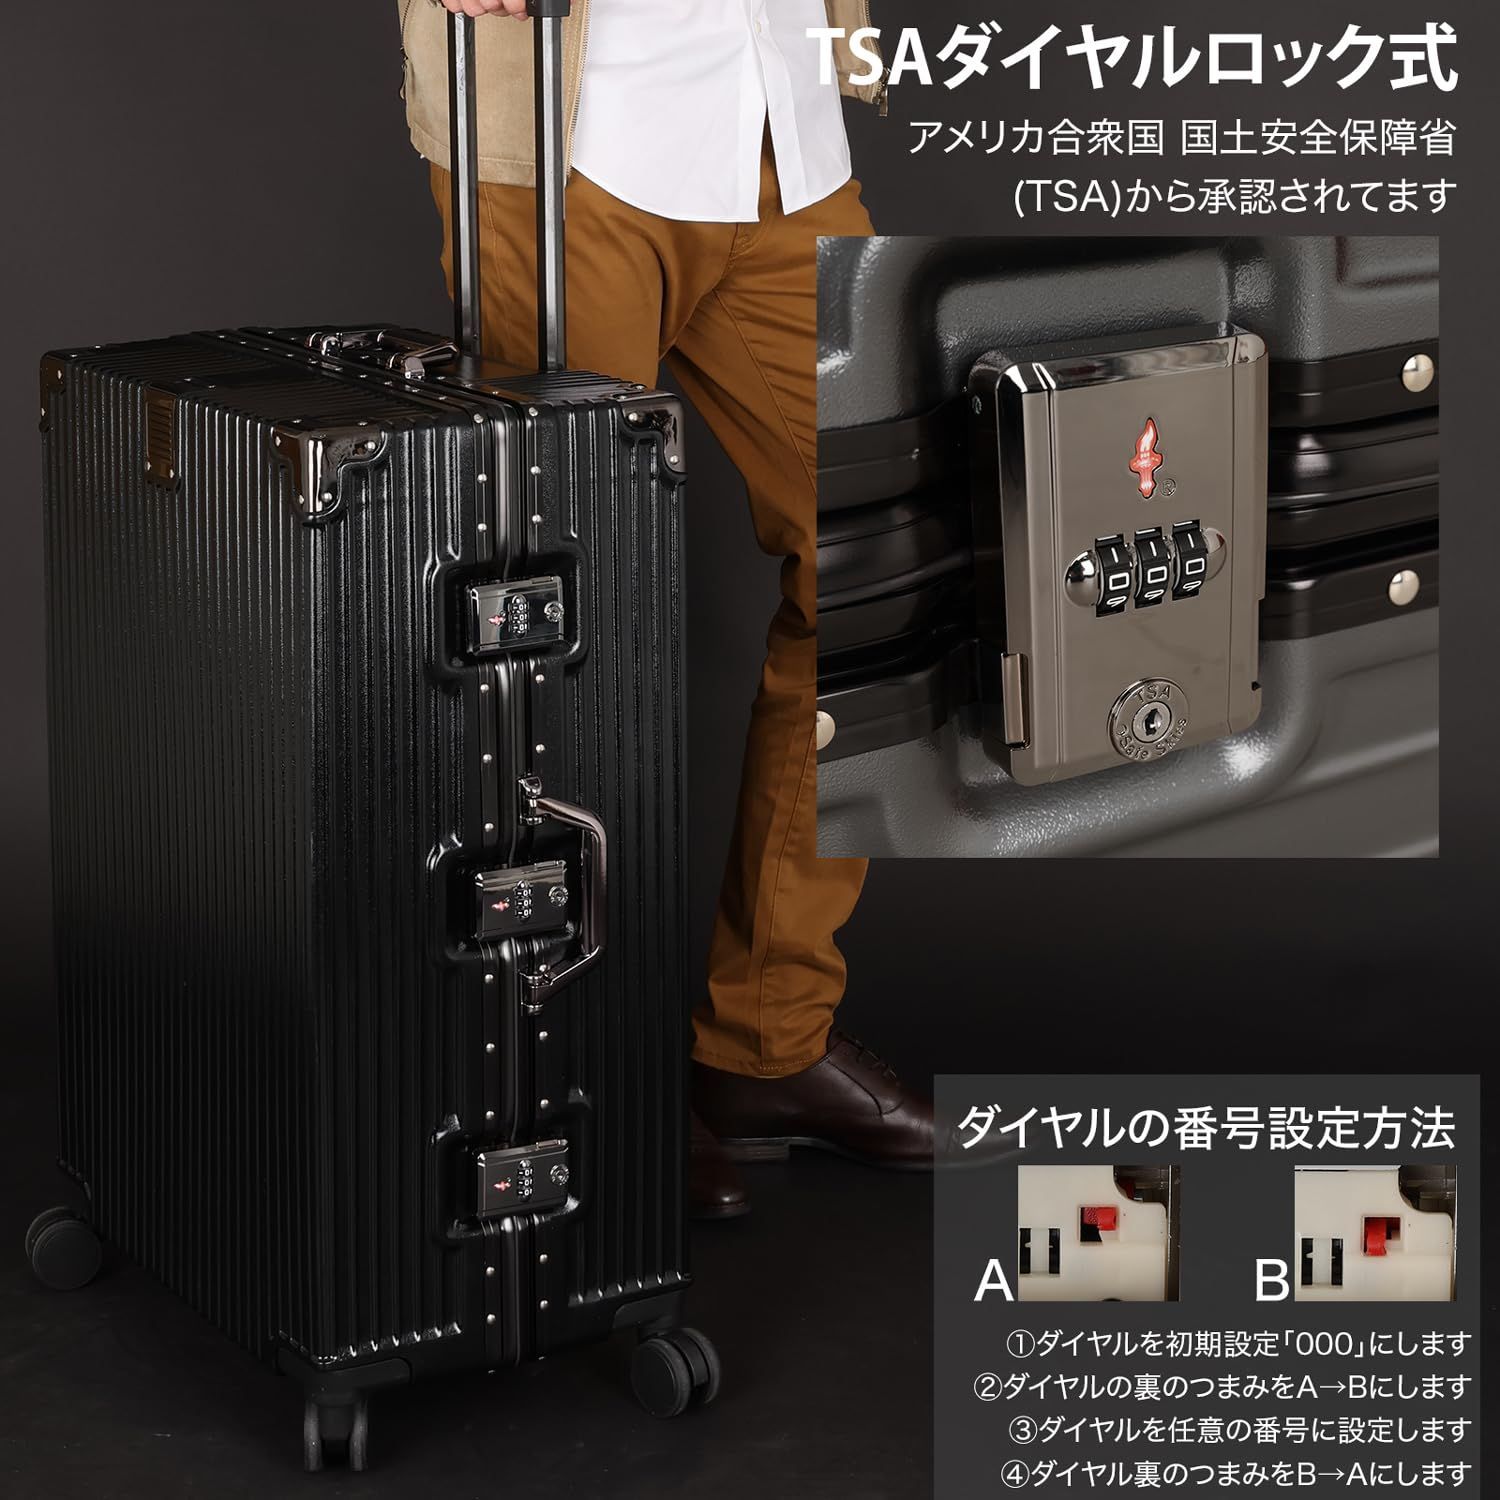 fofo] スーツケース キャリーケース 機内持ち込み 大型 旅行 (Lサイズ